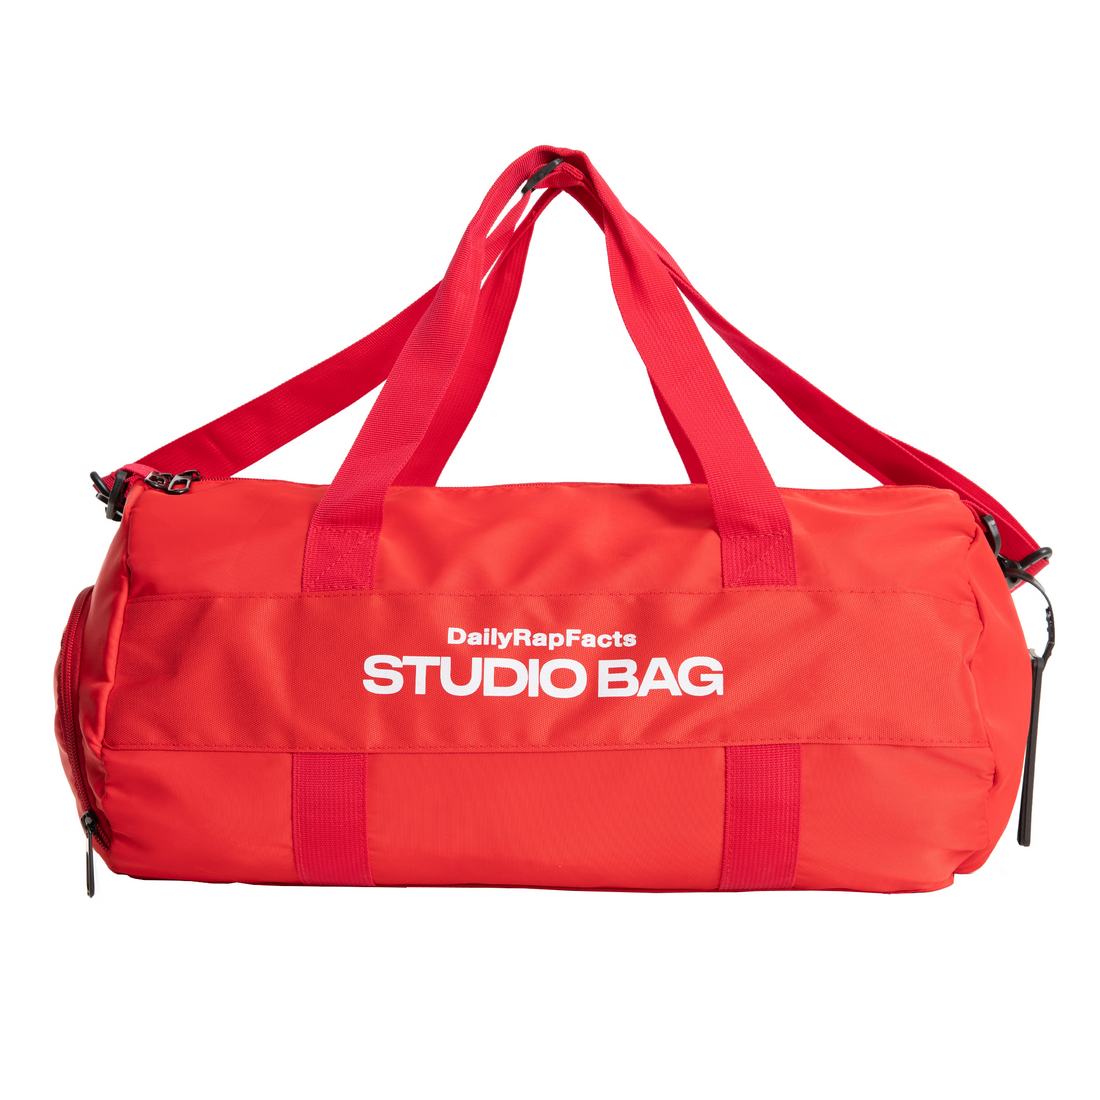 Full Photo Gallery: Studio Bag